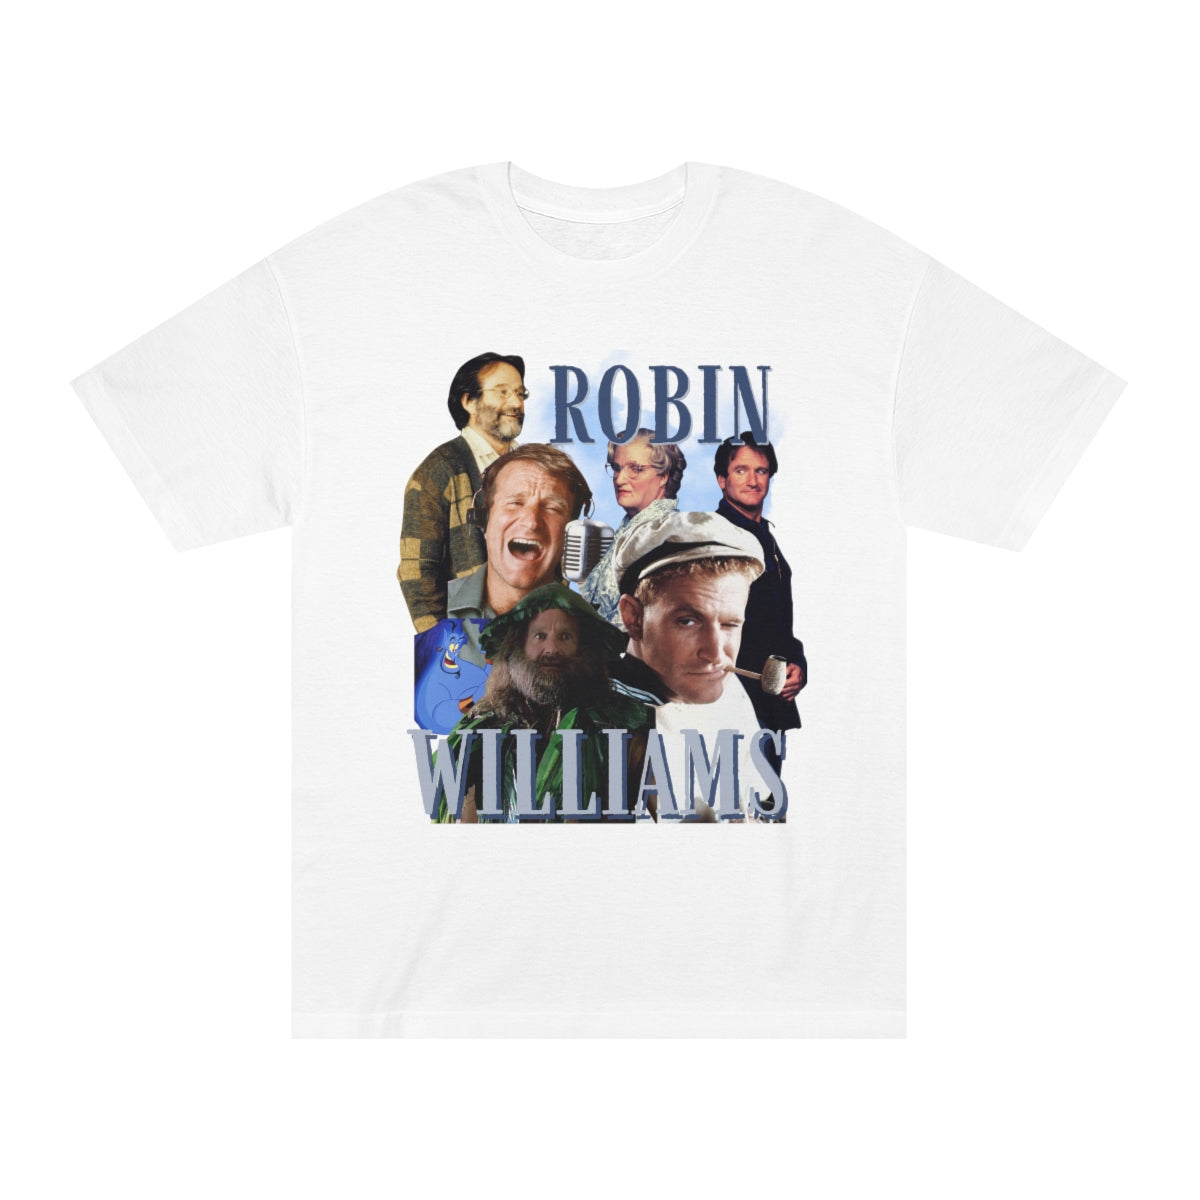 Robin Williams Vintage Shirt, Classic Films Retro Shirt, Robin Williams Bootleg Shirt, 90s Vintage Graphic Tee